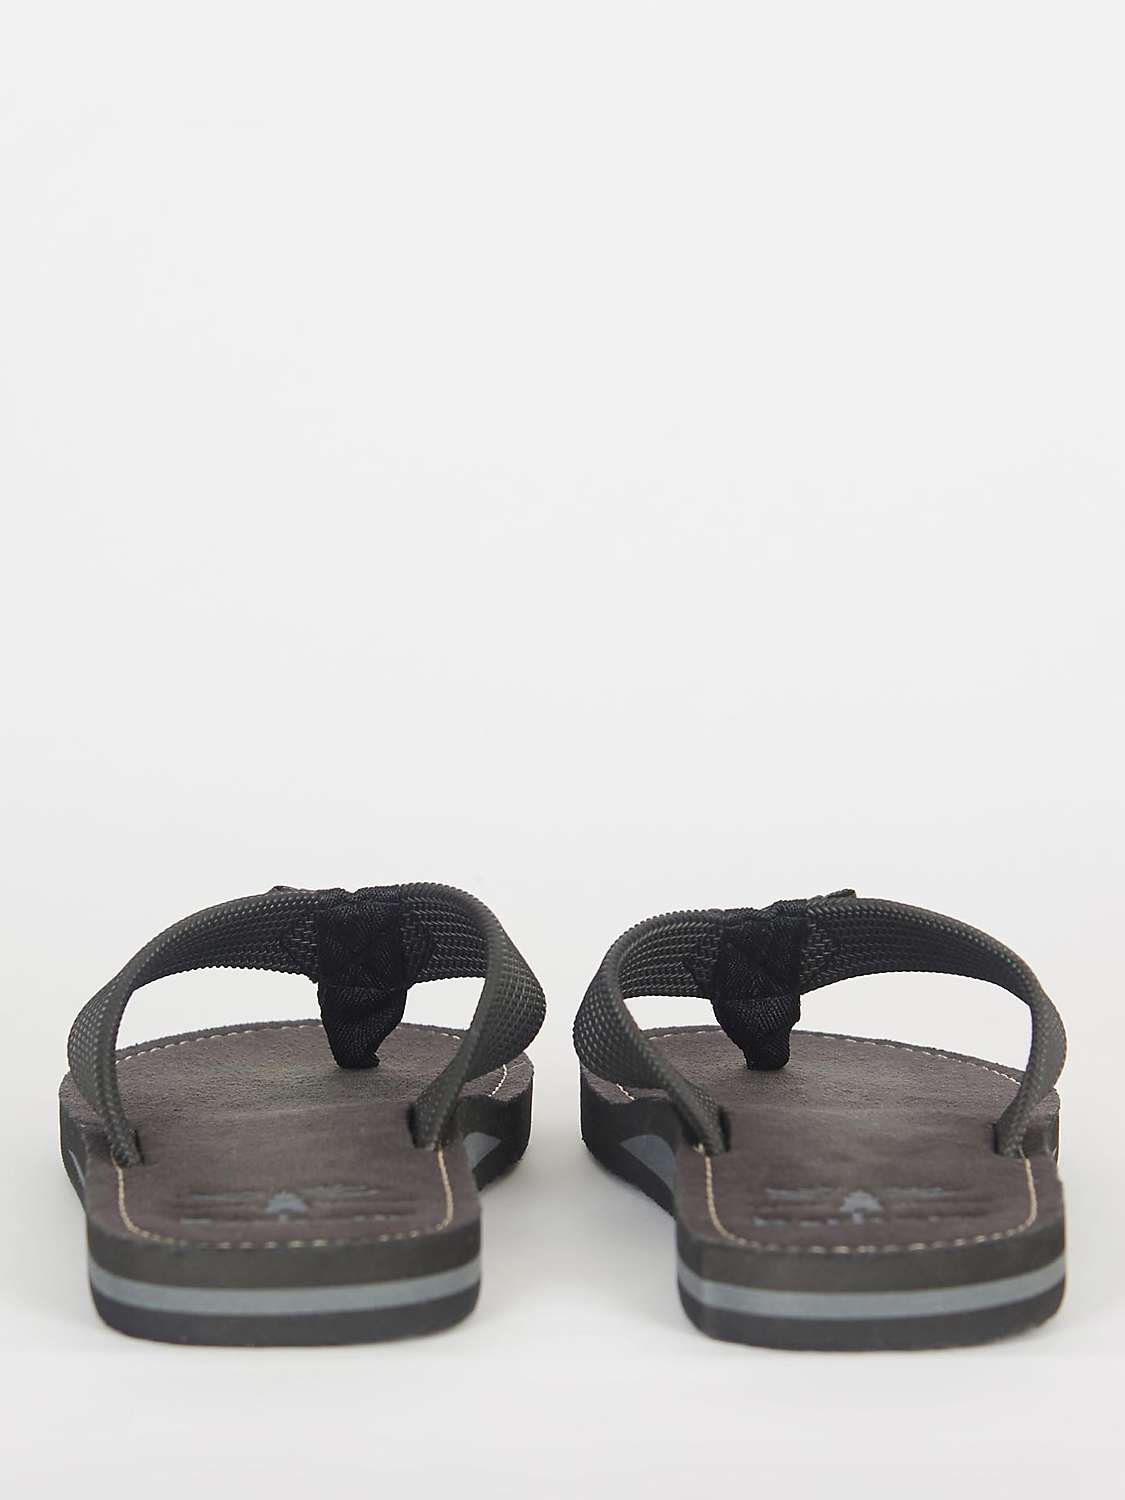 Buy Barbour Toeman Sandals Online at johnlewis.com